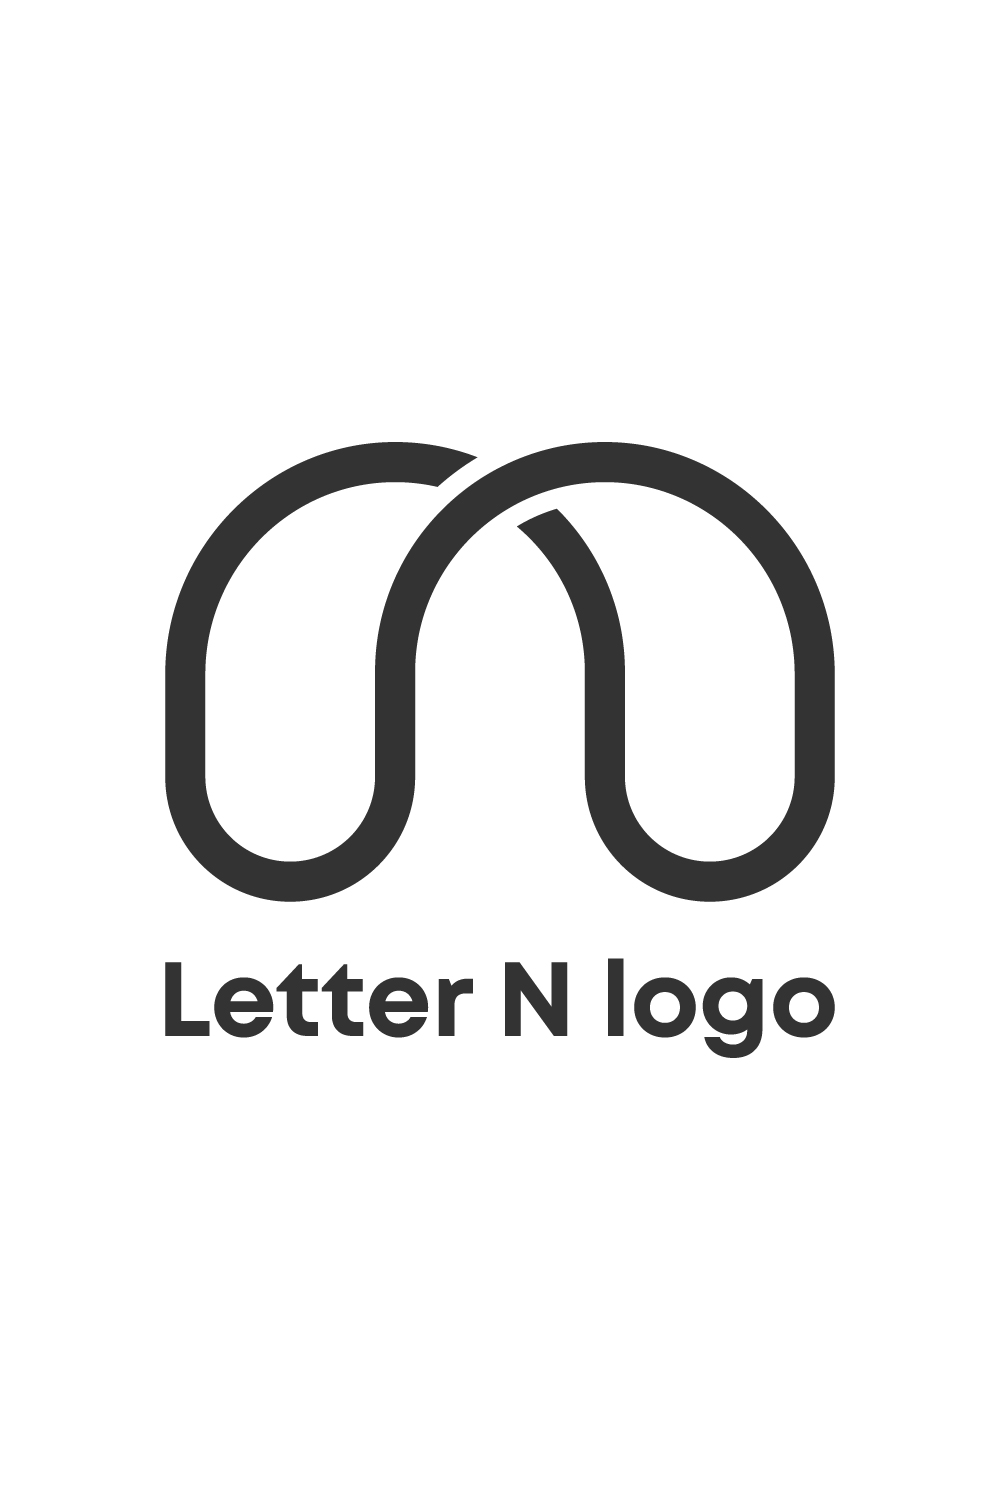 999 logo letter 28125803 Vector Art at Vecteezy